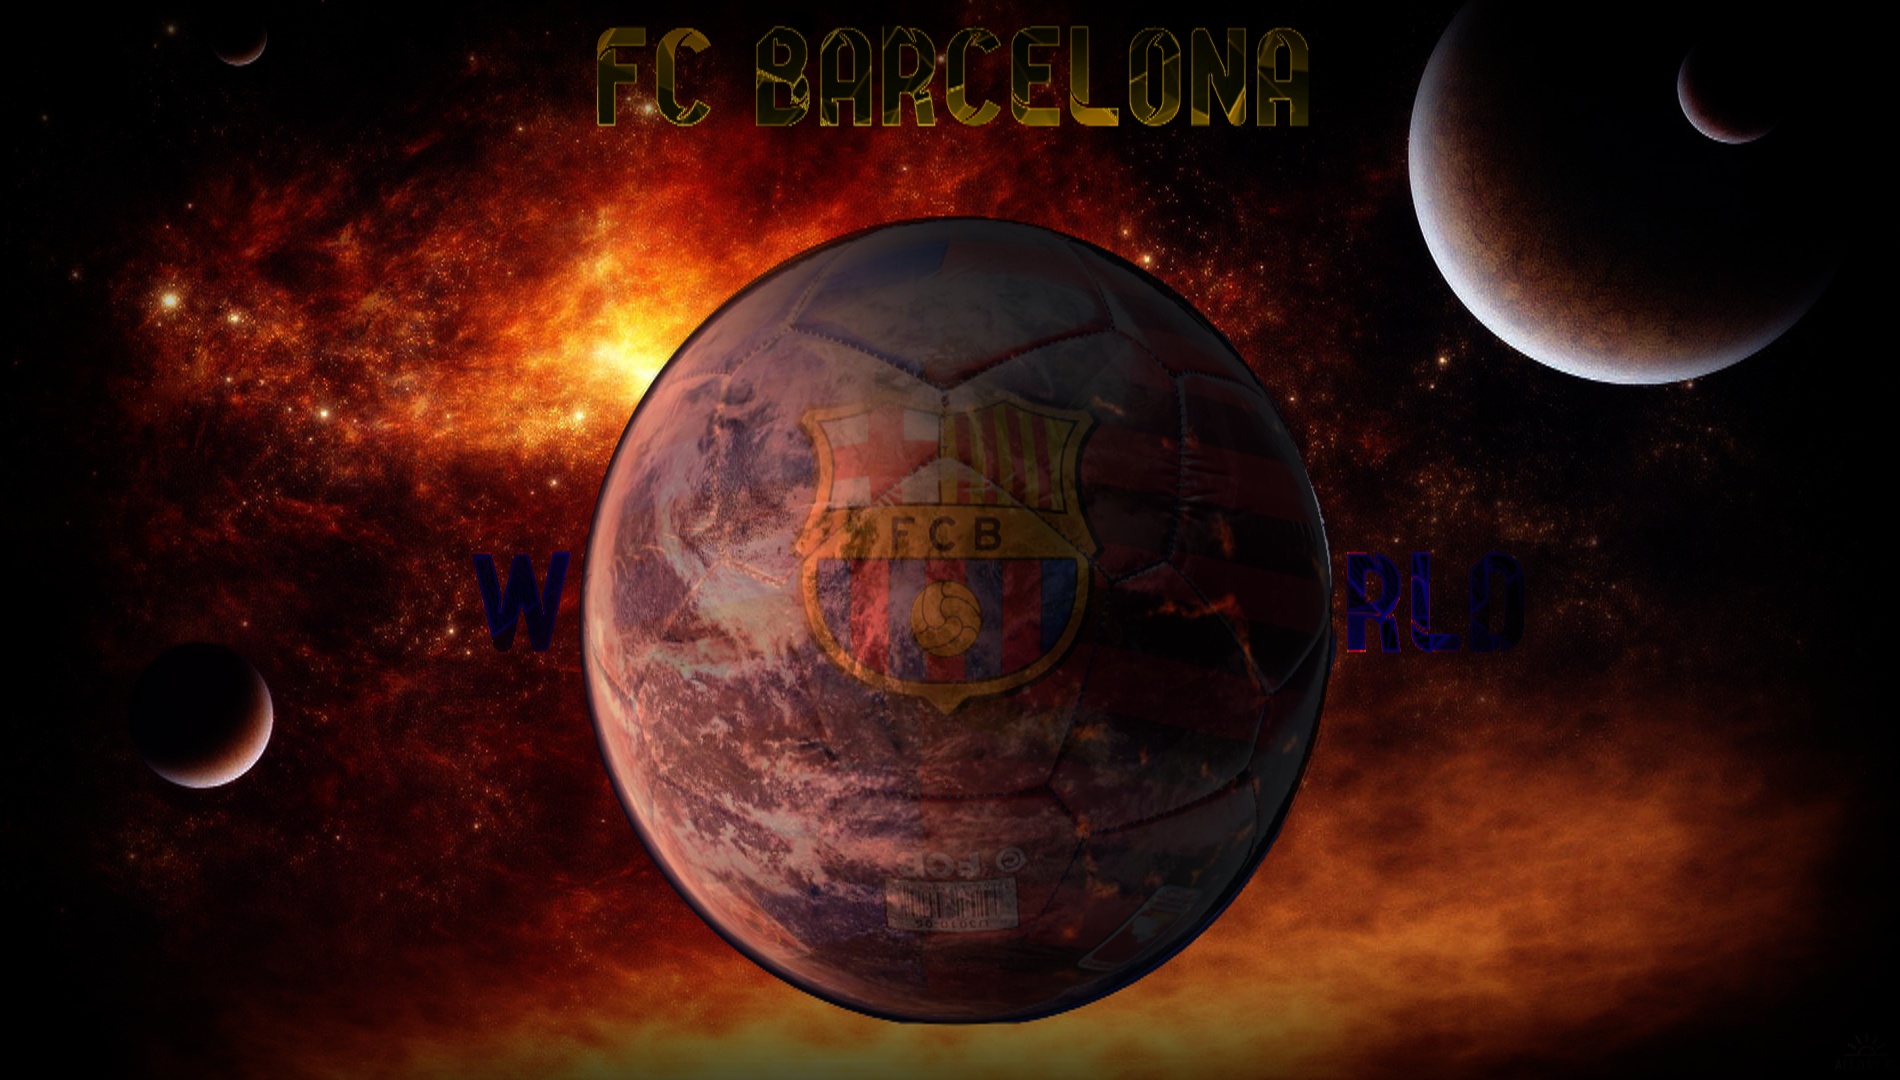 Sports FC Barcelona HD Wallpaper | Background Image